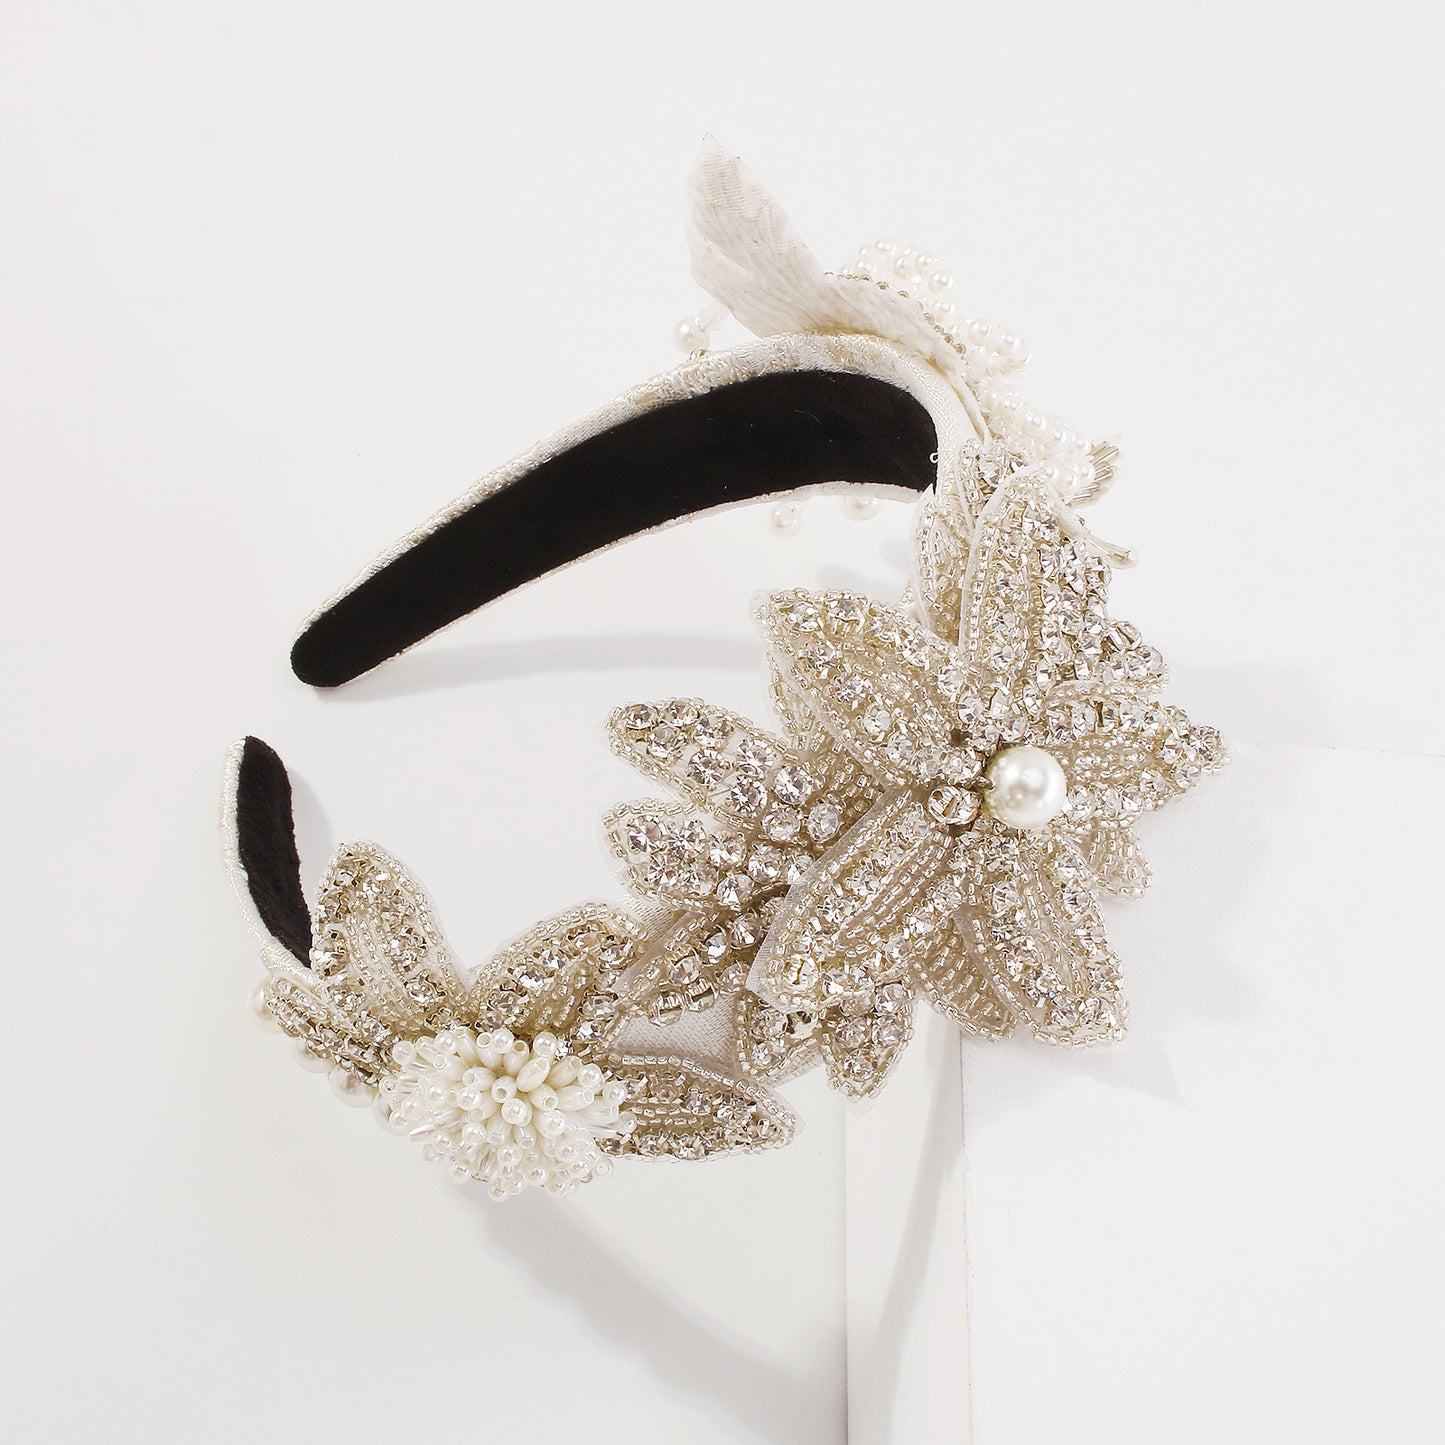 Wedding Rhinestone & Pearl Headband medyjewelry